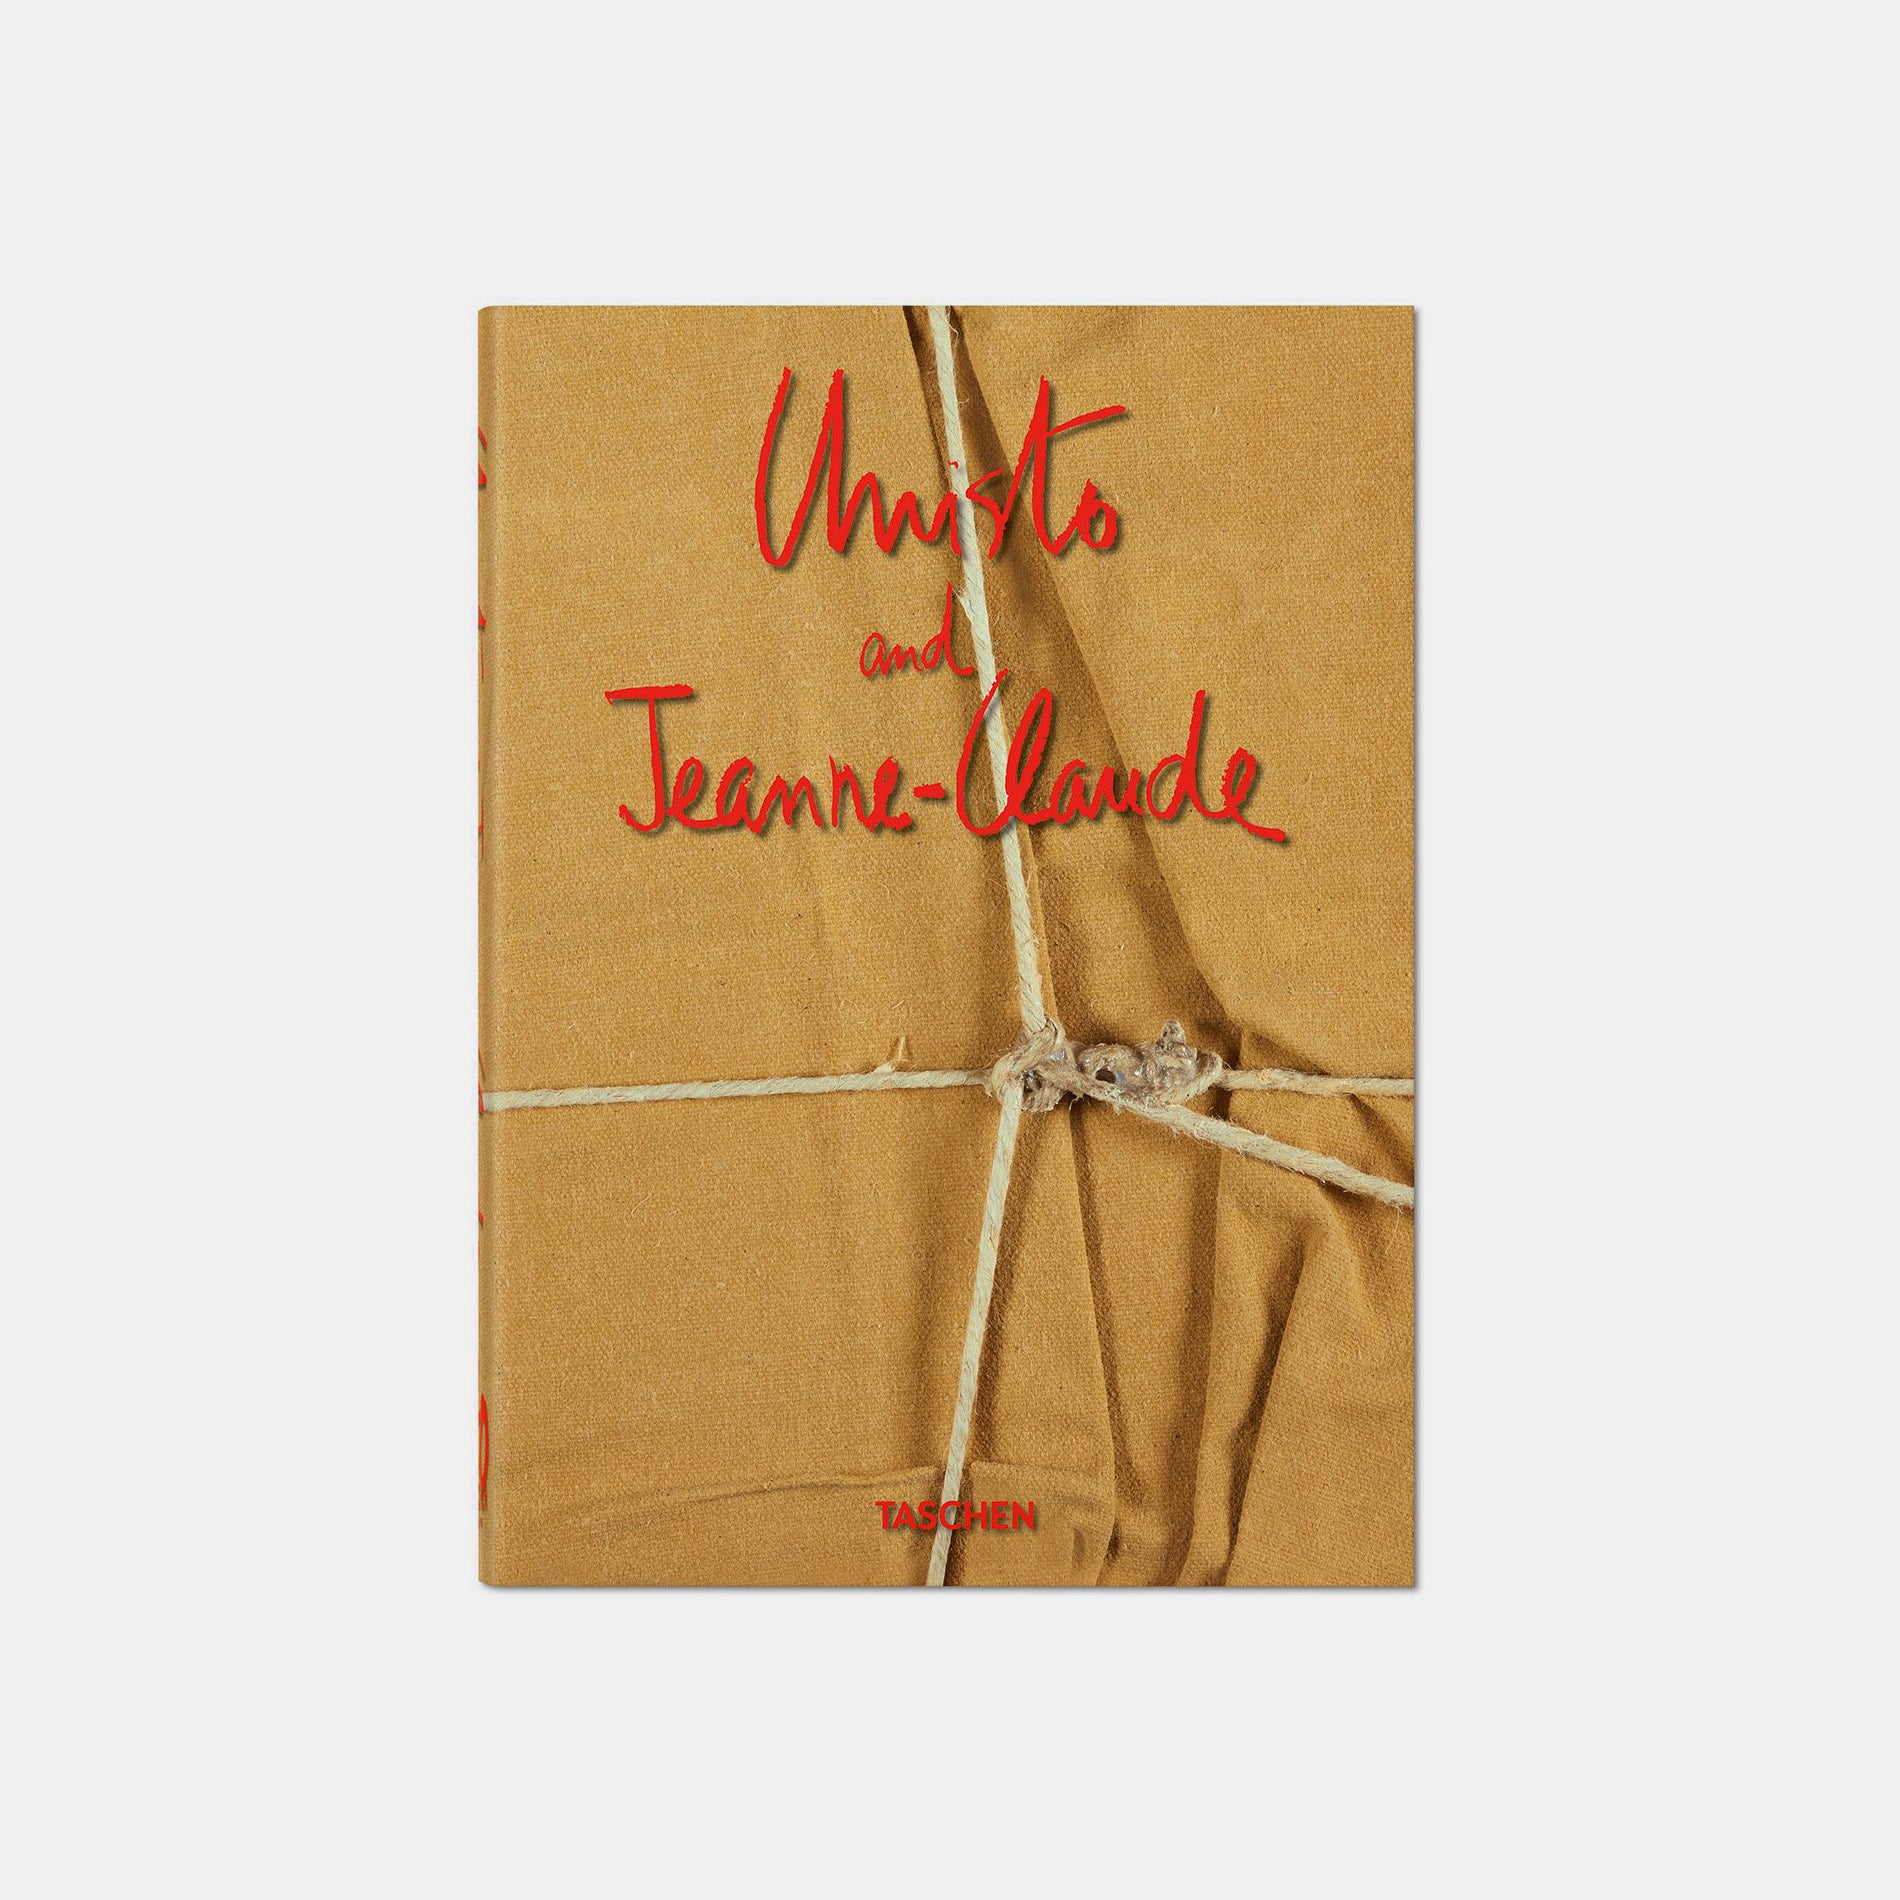 Christo et Jeanne Claude 